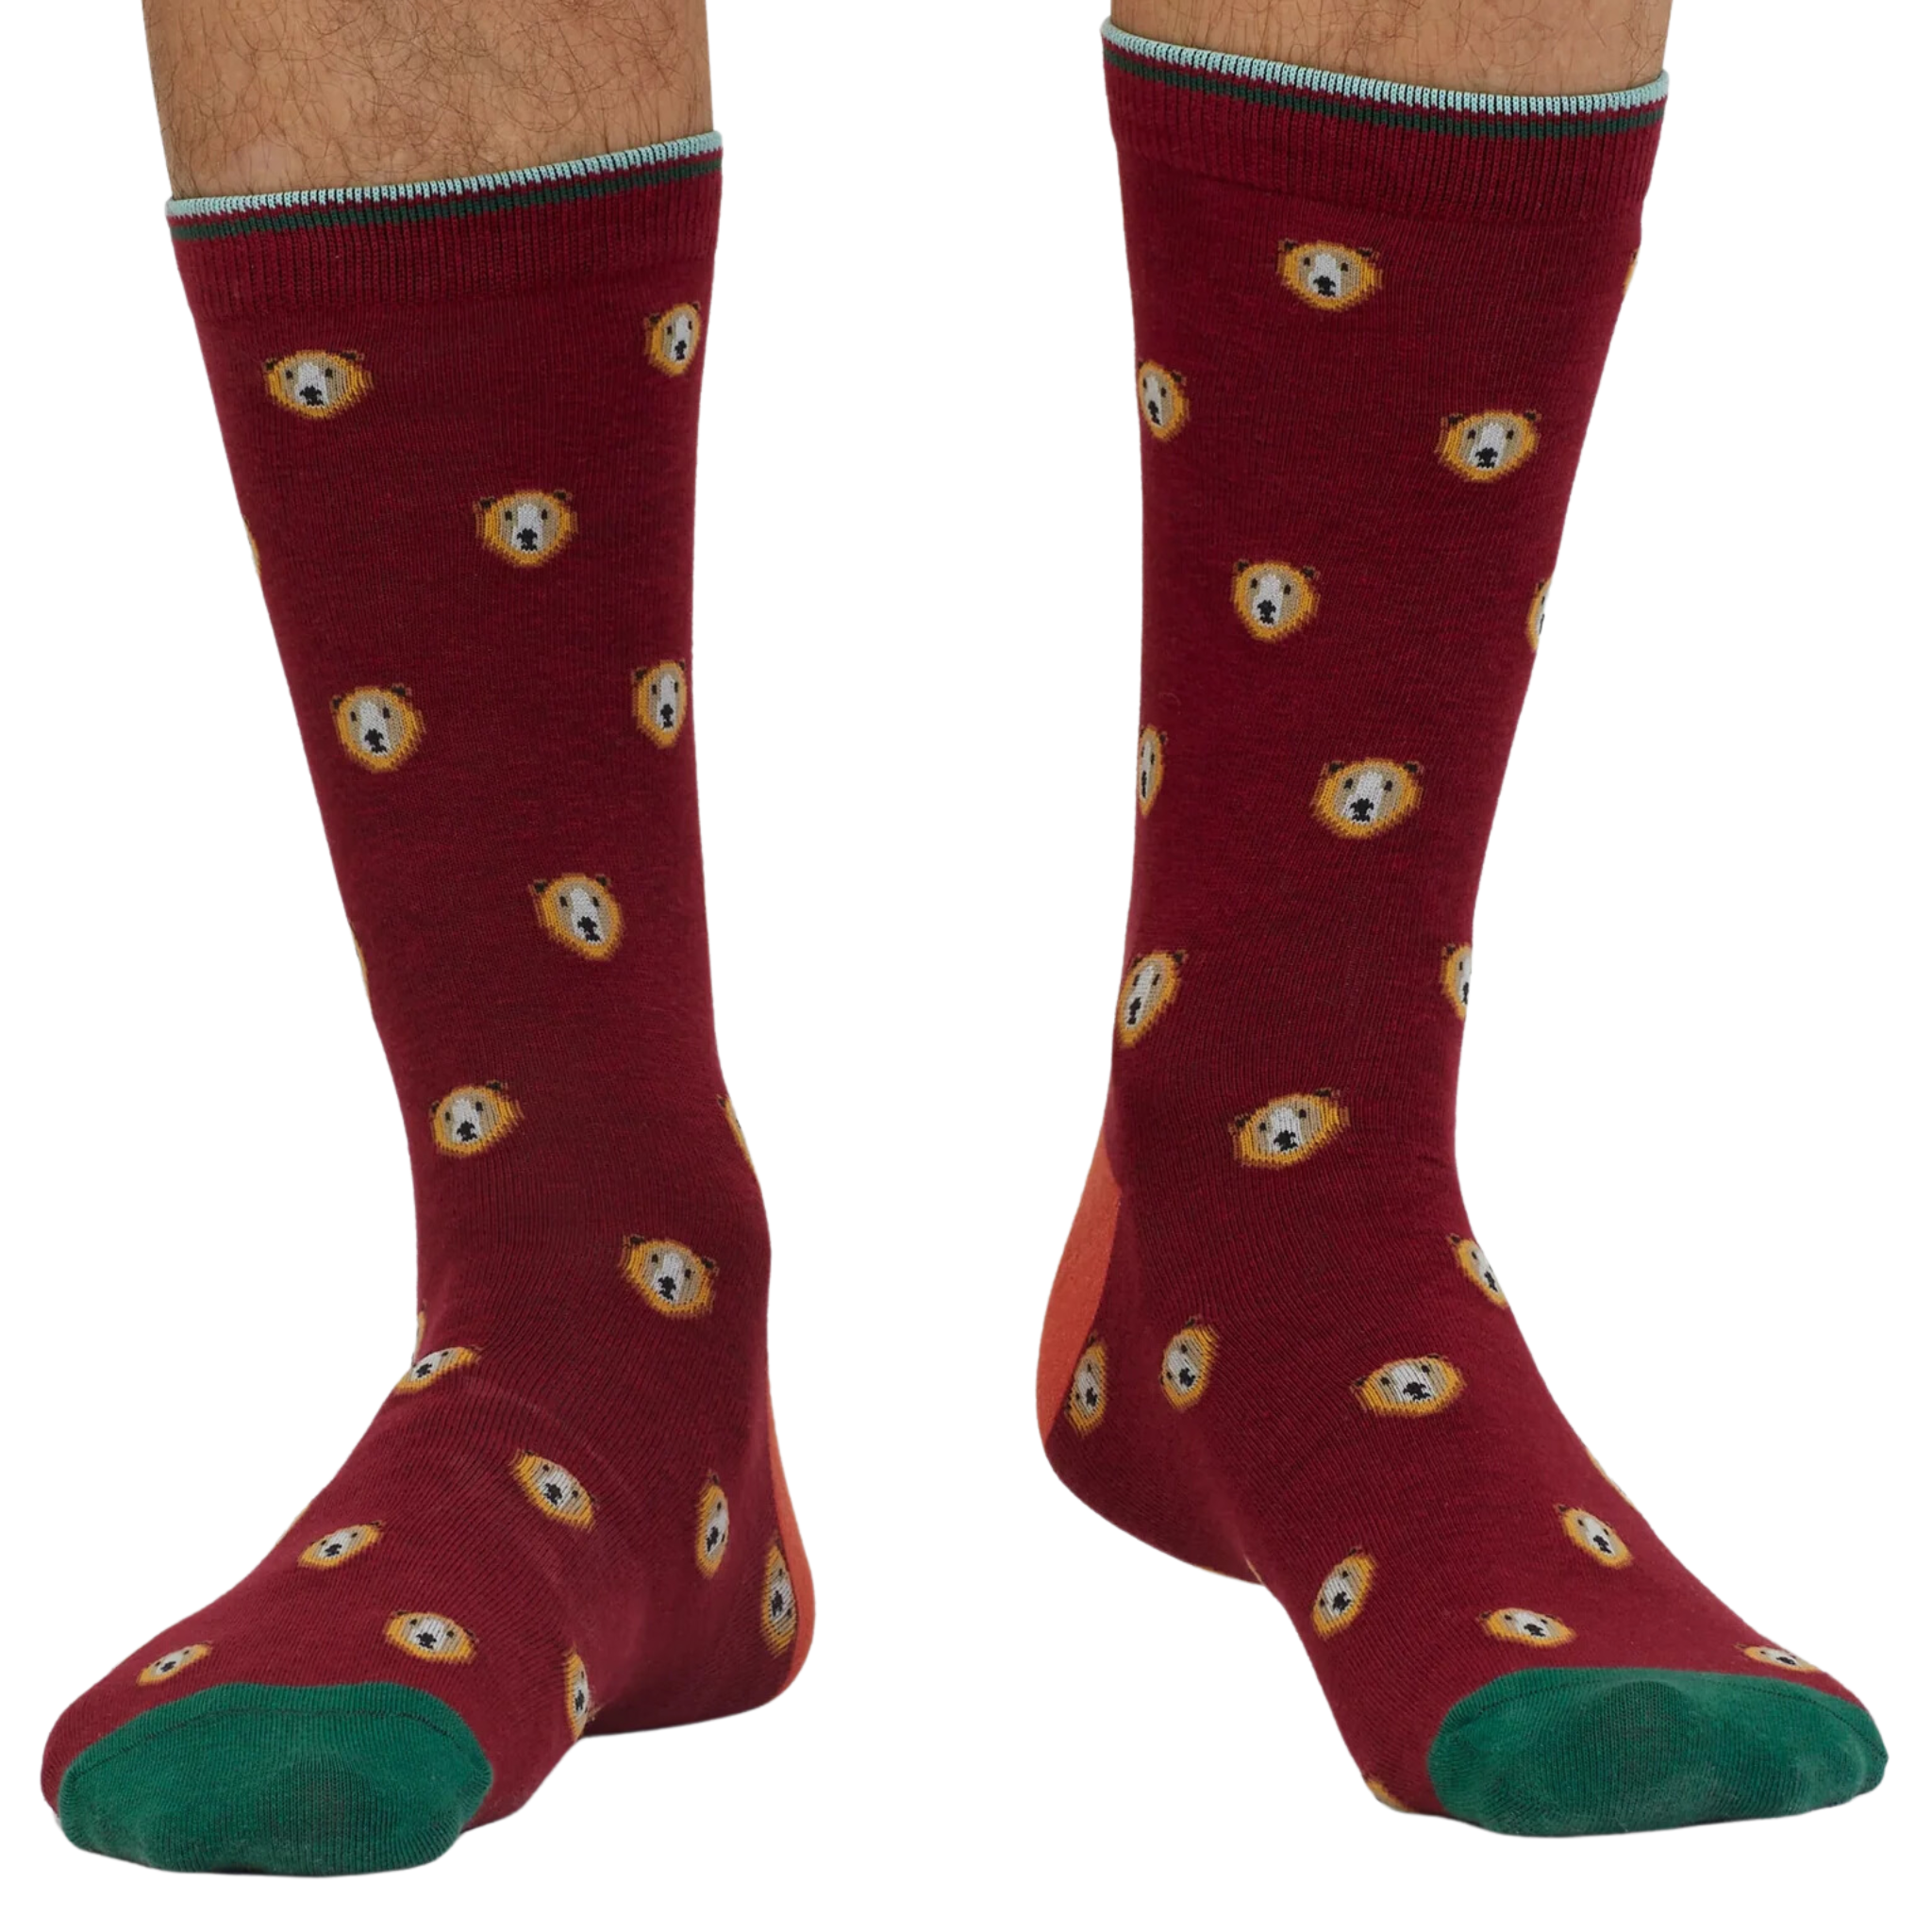 Axel Bear Socks (Men's)